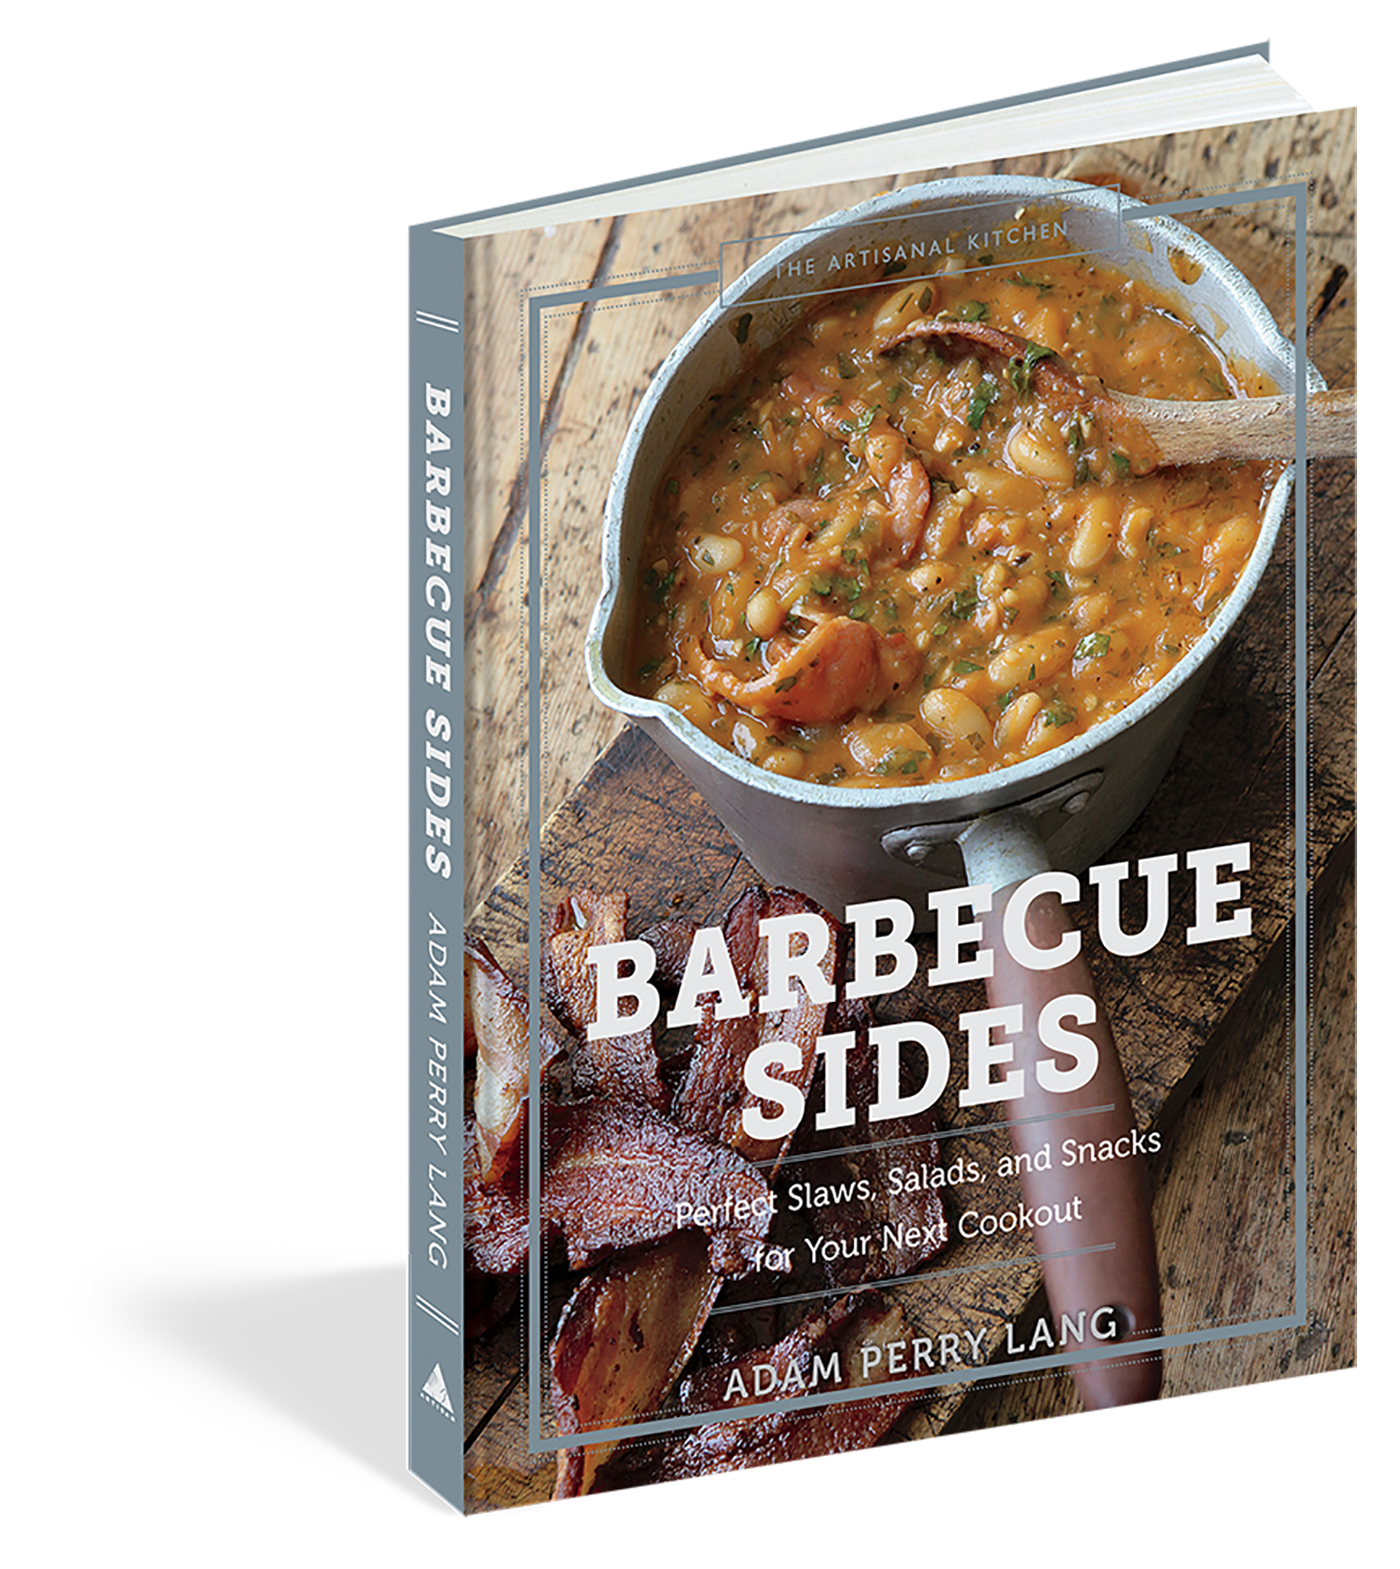 The Artisanal Kitchen: Barbecue Sides - NashvilleSpiceCompany